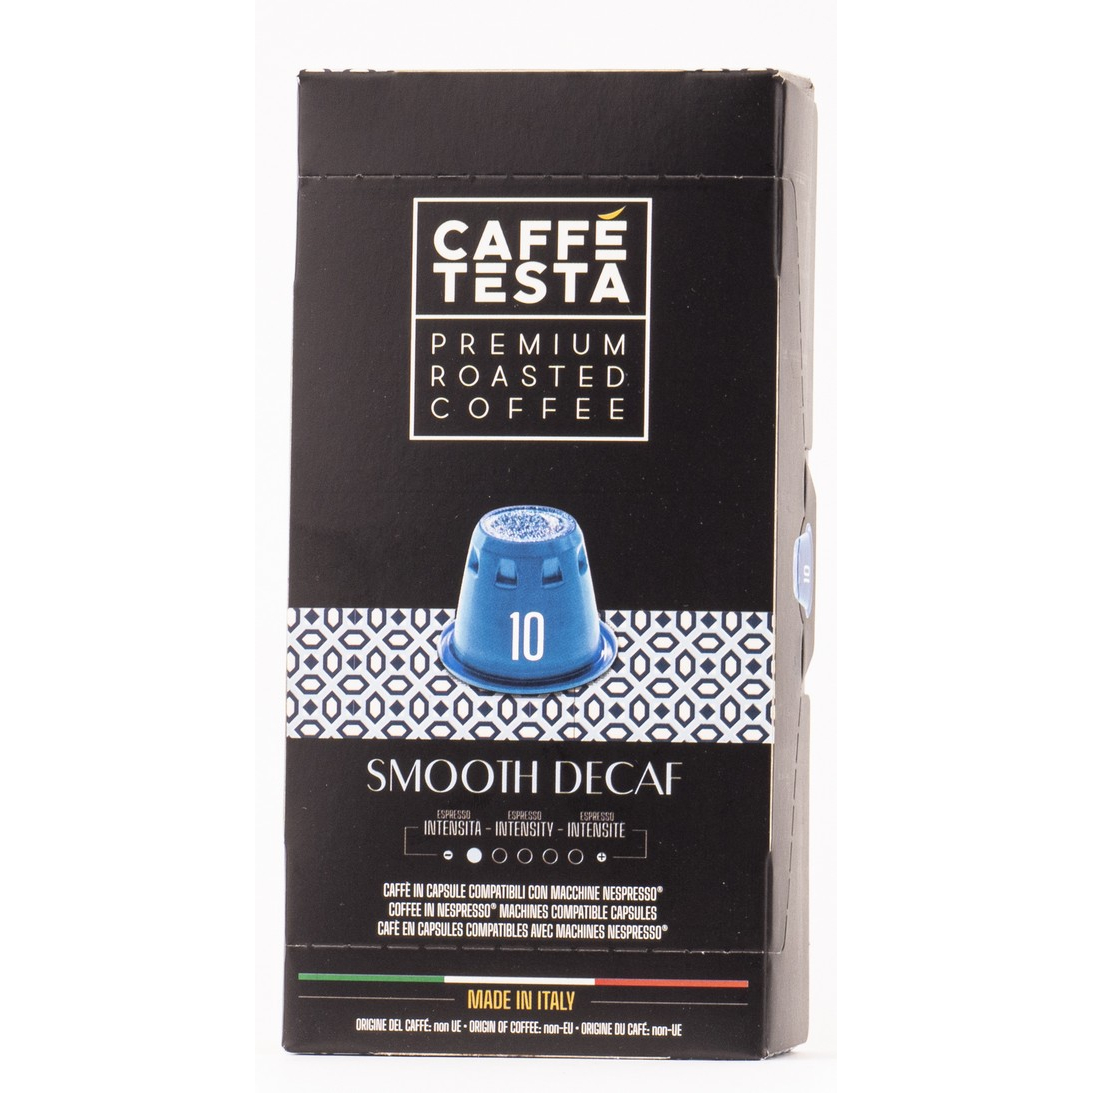 Кофе Caffe Testa Smooth Decaf в капсулах 70/30, 55 г кофе в капсулах caffe vergnano espresso intenso 10 шт х 5 г